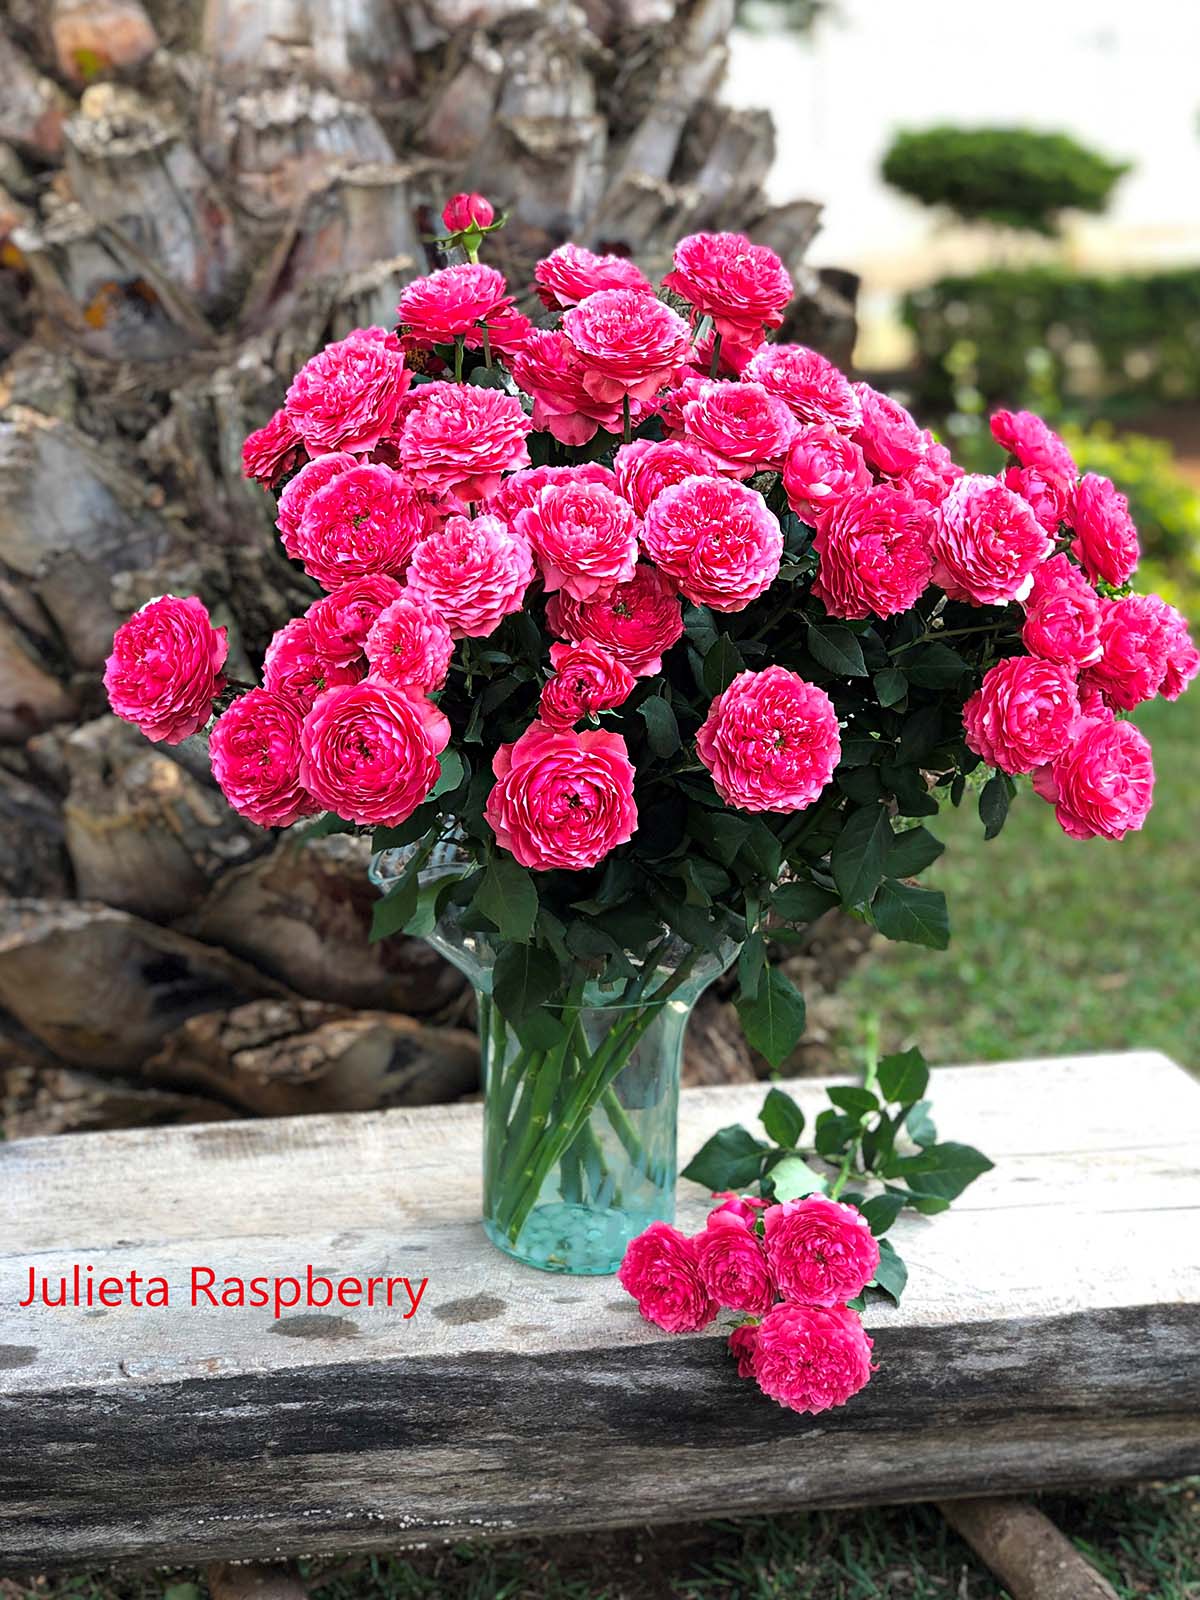 TOTF2021FE 06 Red Lands Roses - Rose Julieta Raspberry